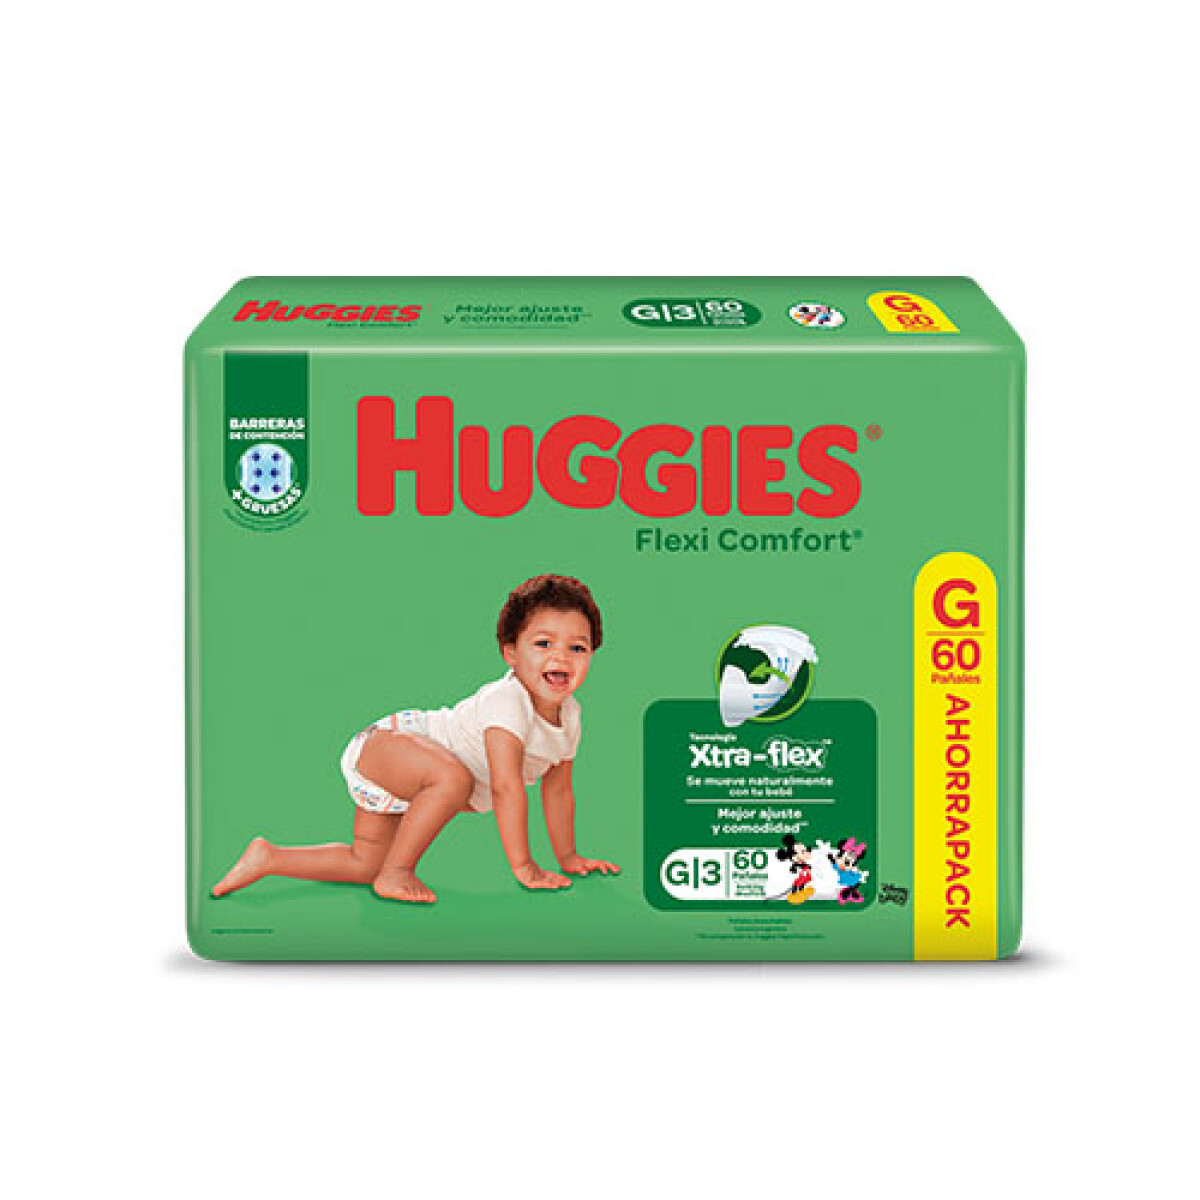 Pañales Huggies Flexi-confortG-3-60 